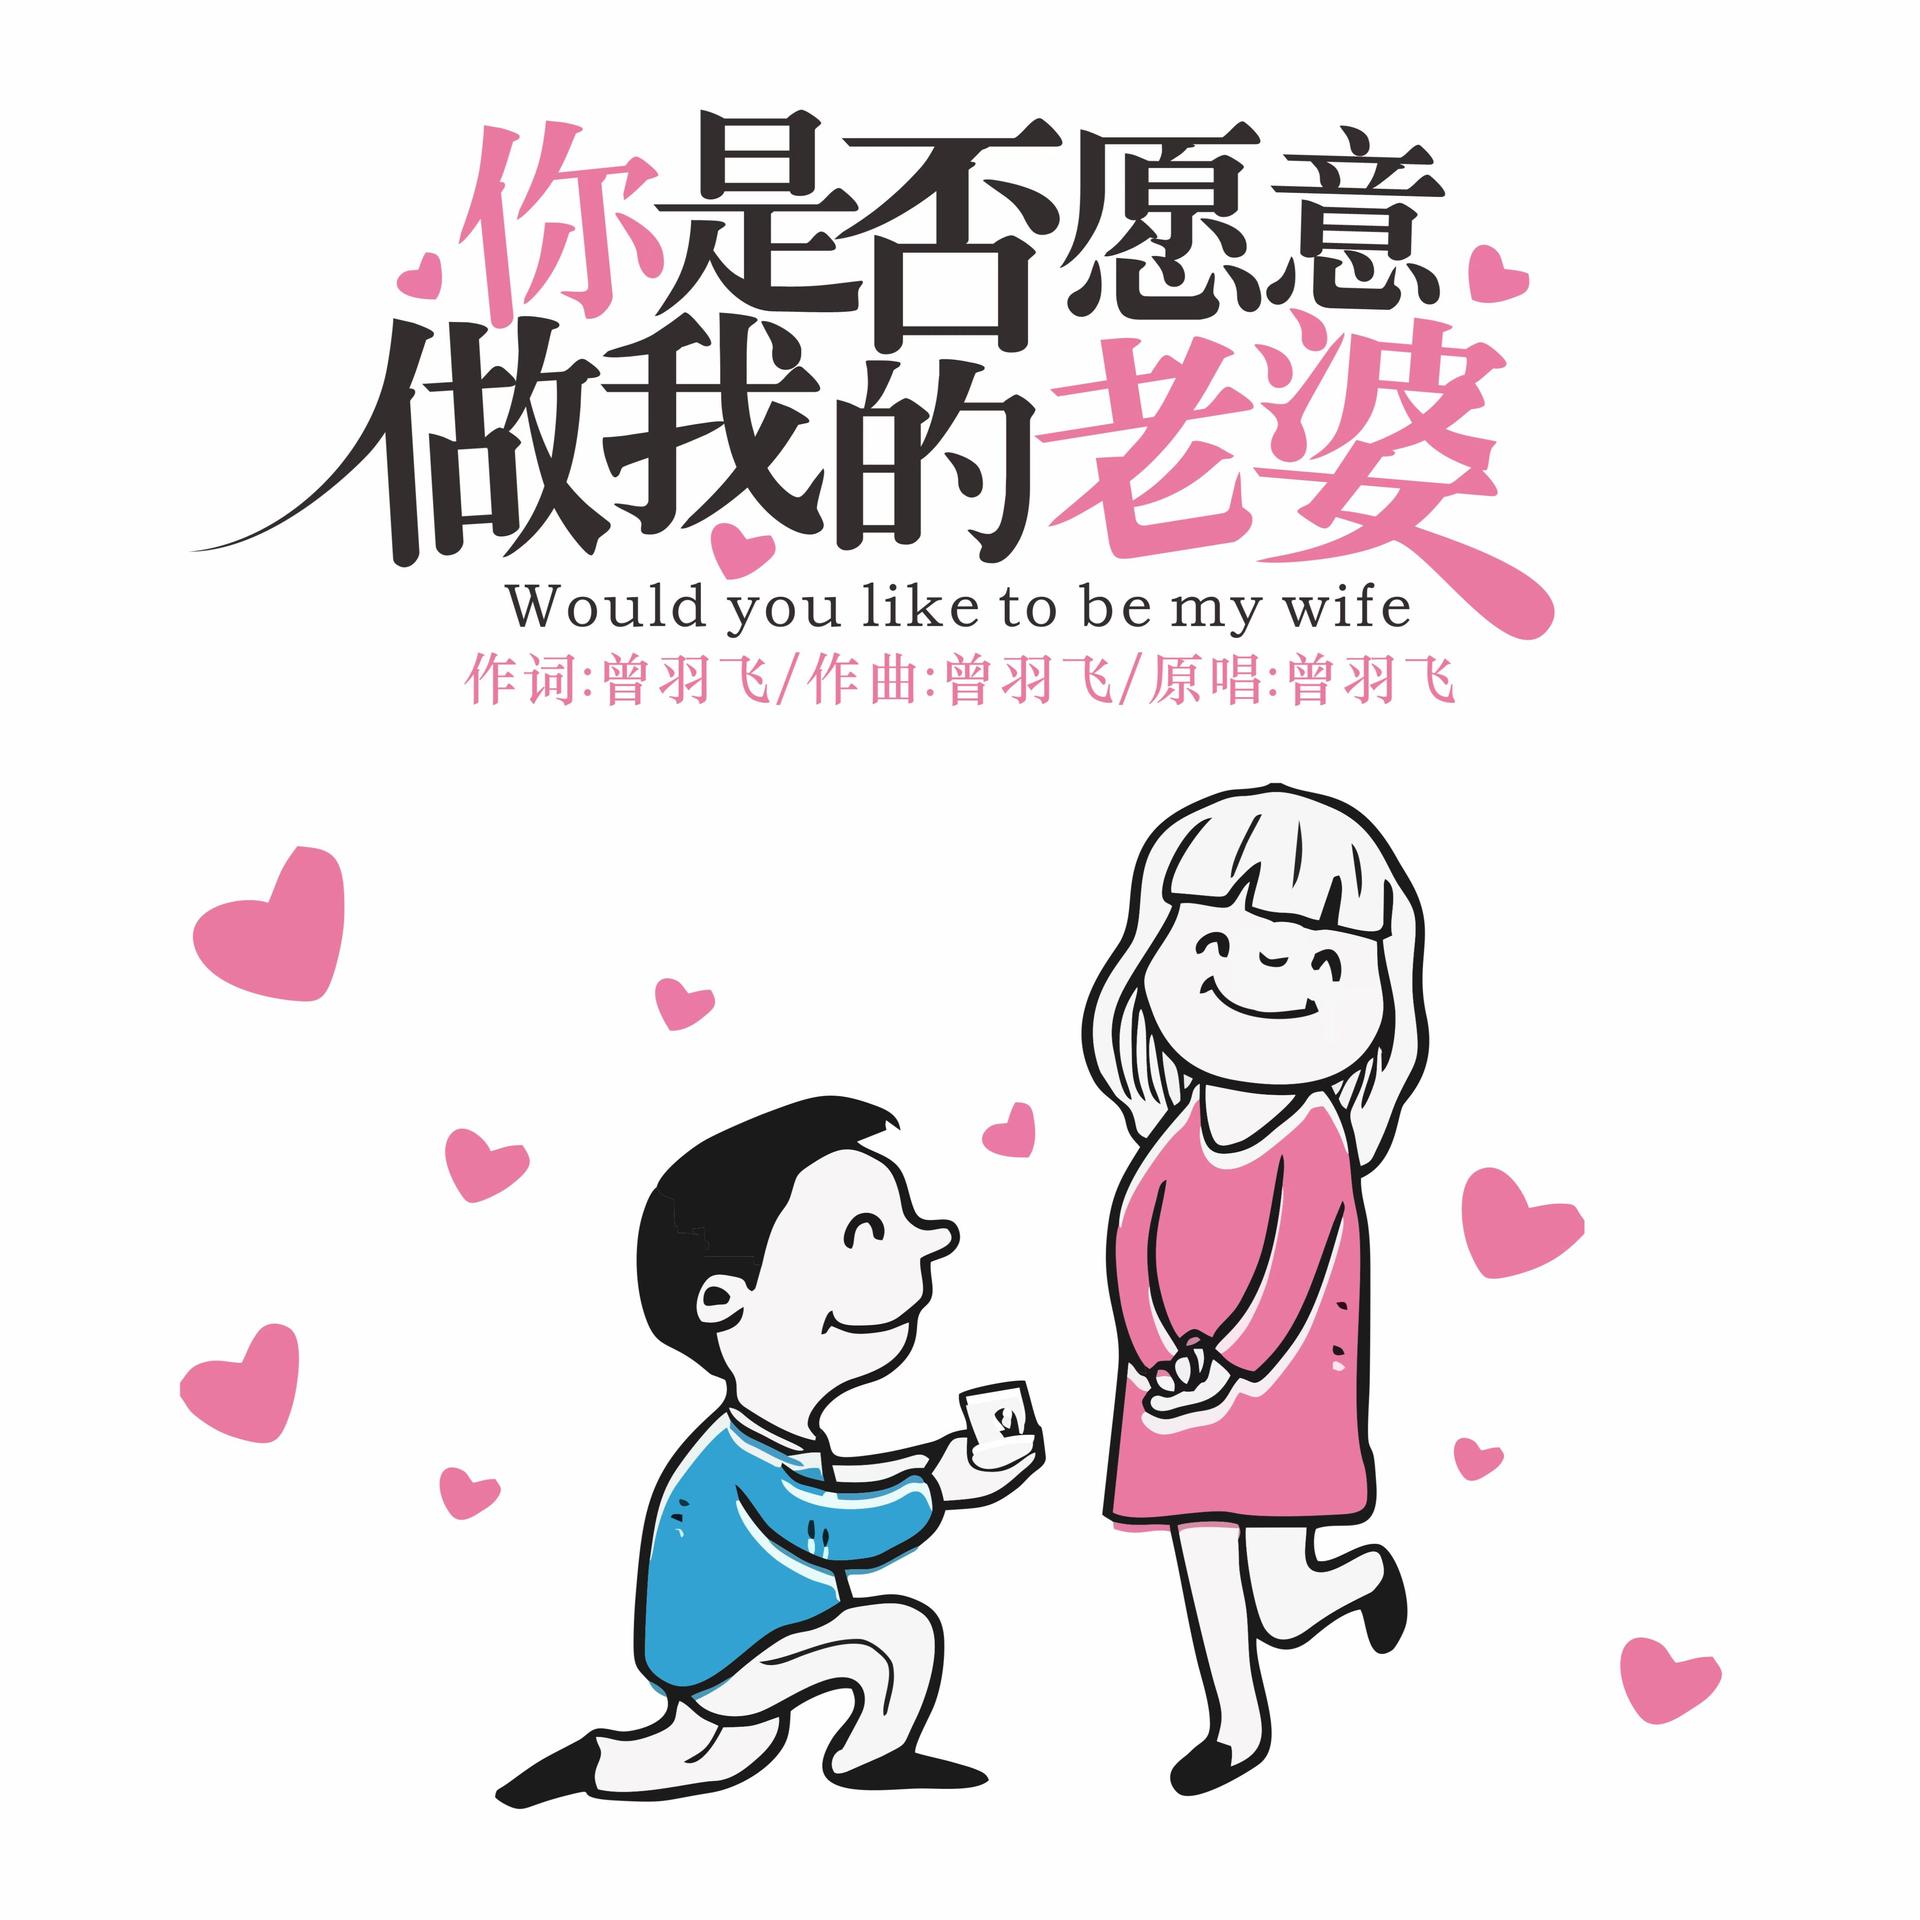 MOONBOI《你愿意做我女友吗?》探索爱情的滋味 - 哔哩哔哩